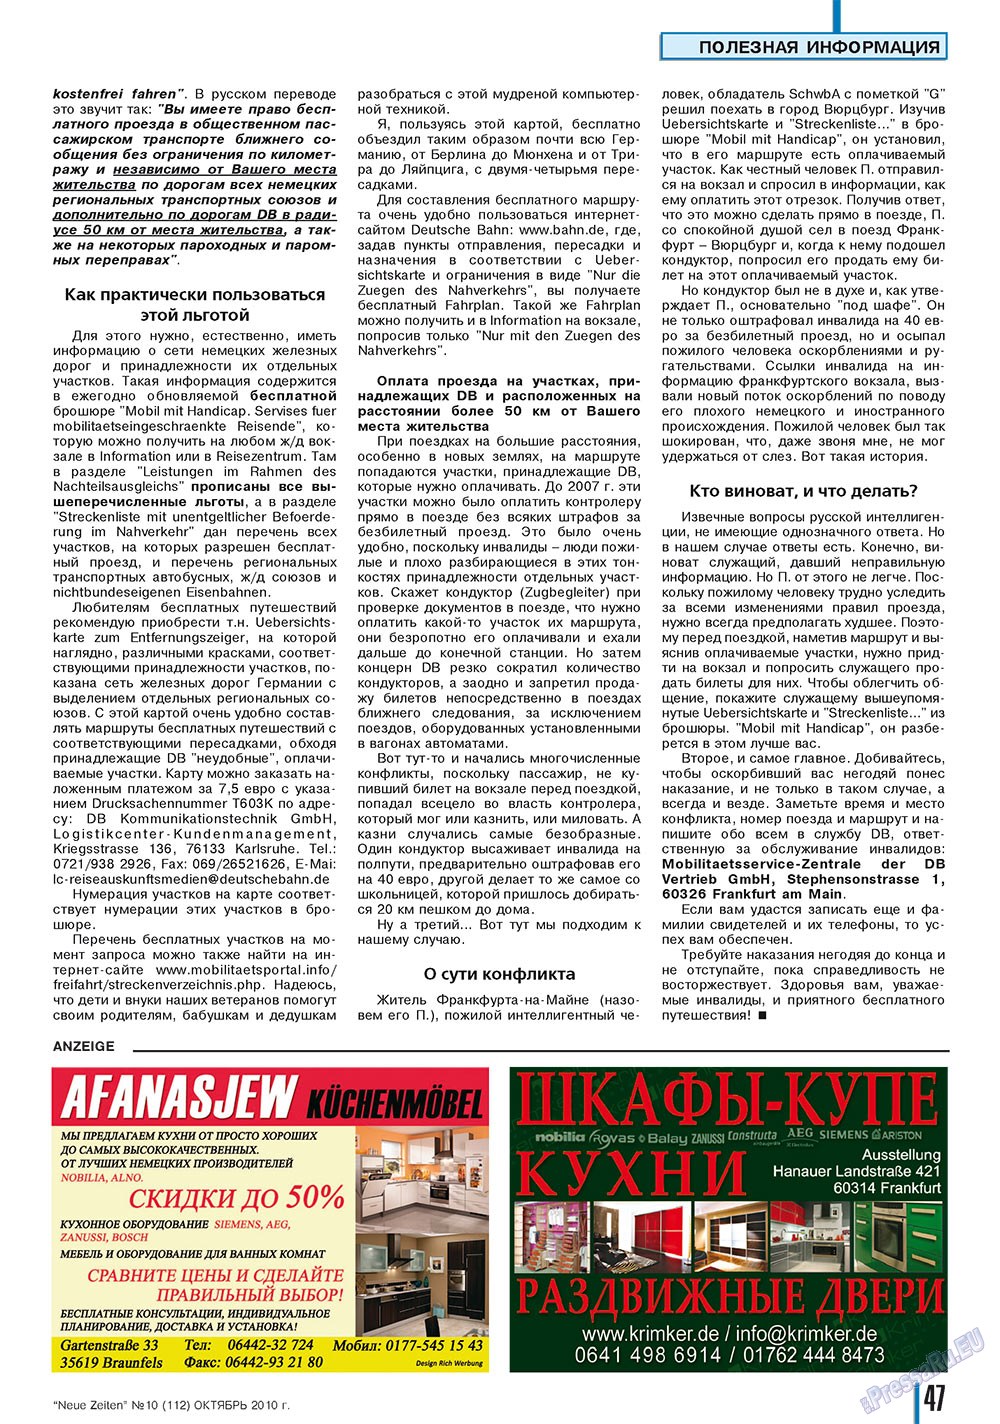 Neue Zeiten (журнал). 2010 год, номер 10, стр. 47